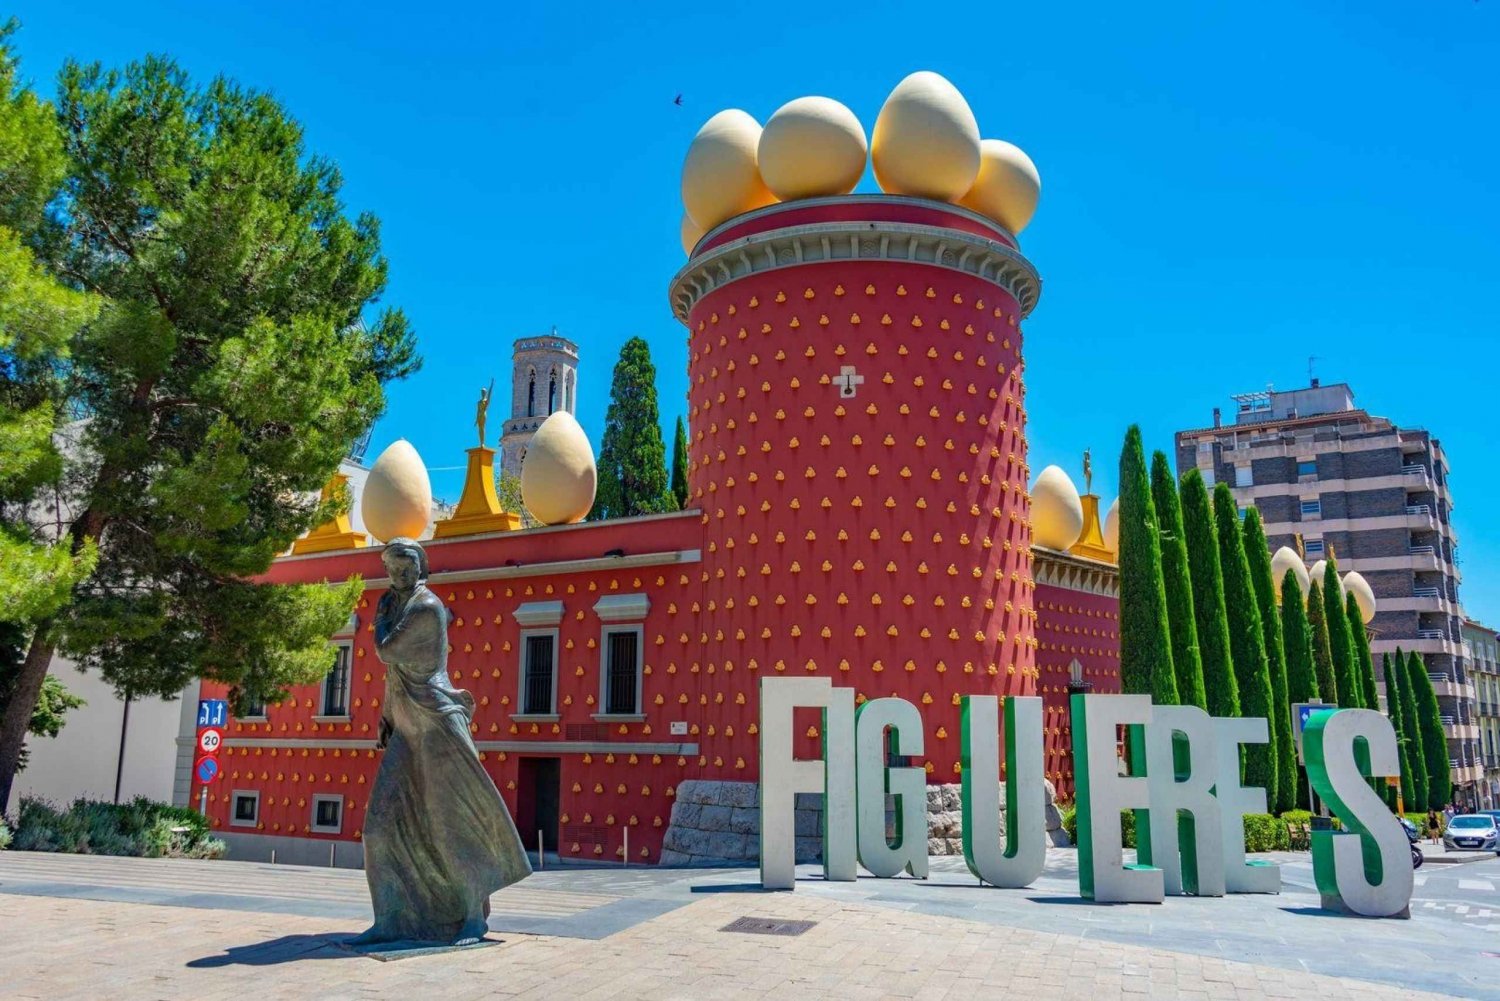 Figueres: Biljett till Dali Theater-Museum och audioguide